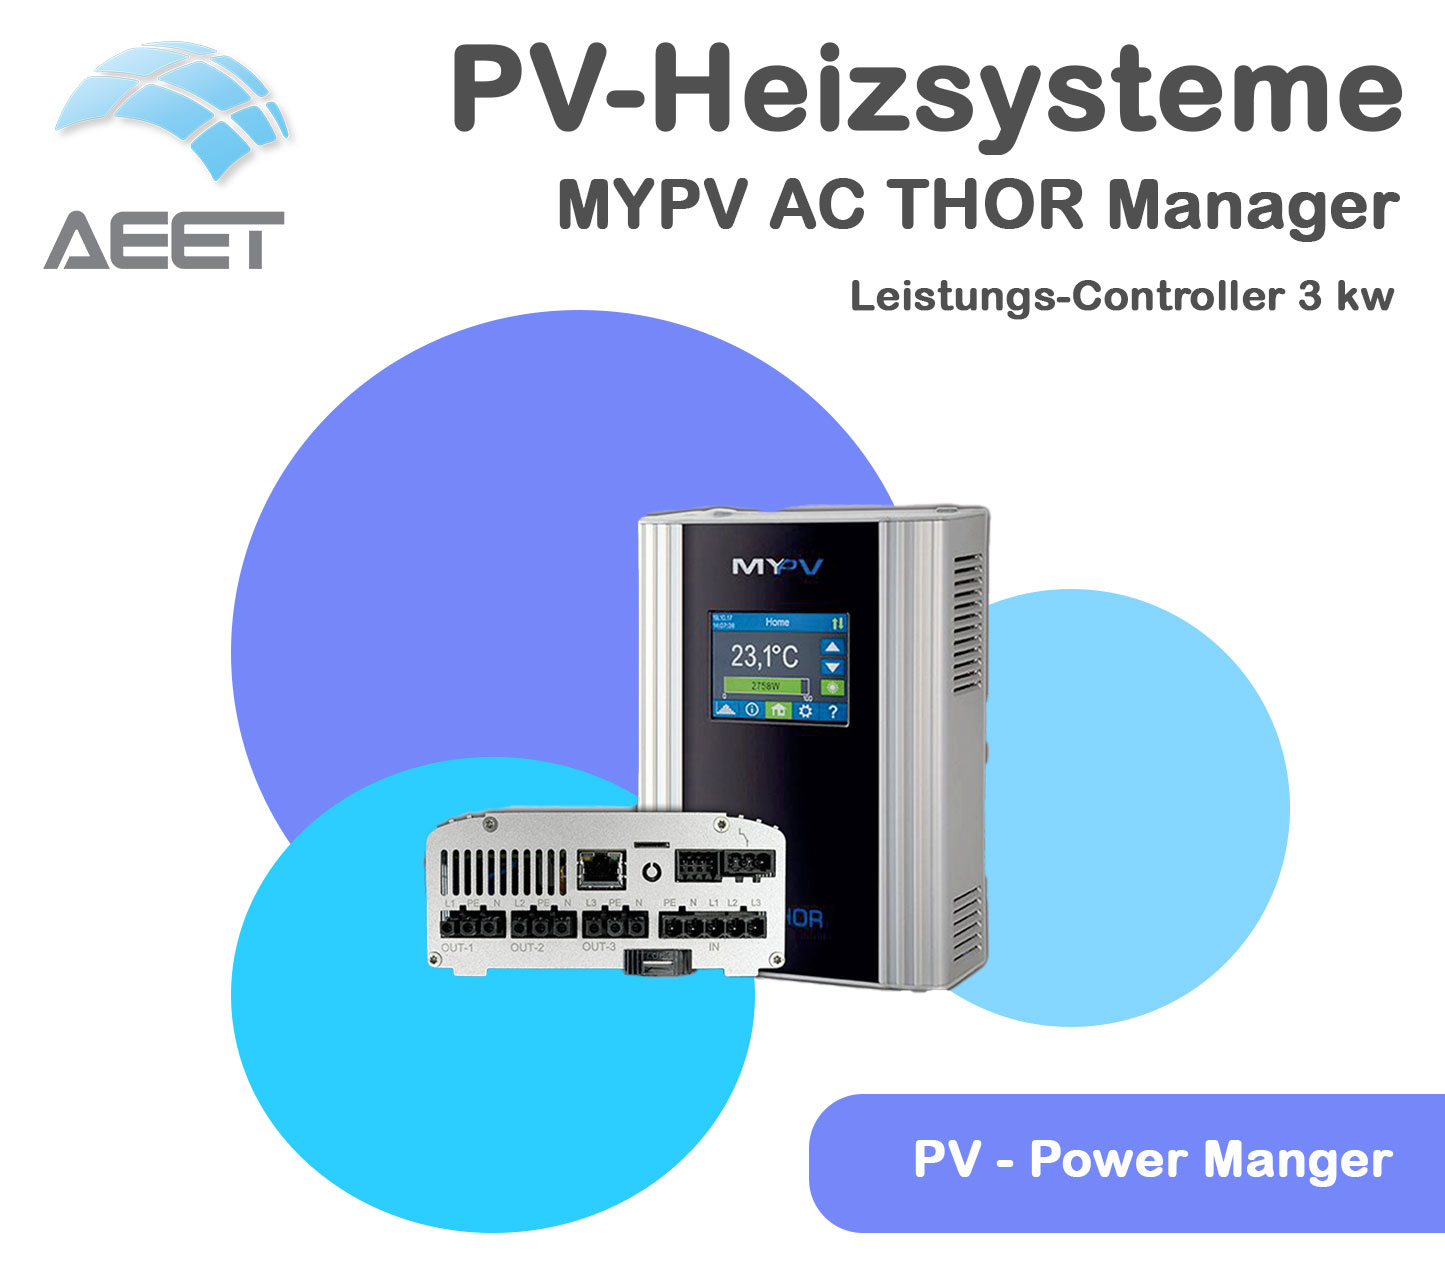 MYPV AC THOR Power Manager Leistungs-Controller 3 kw